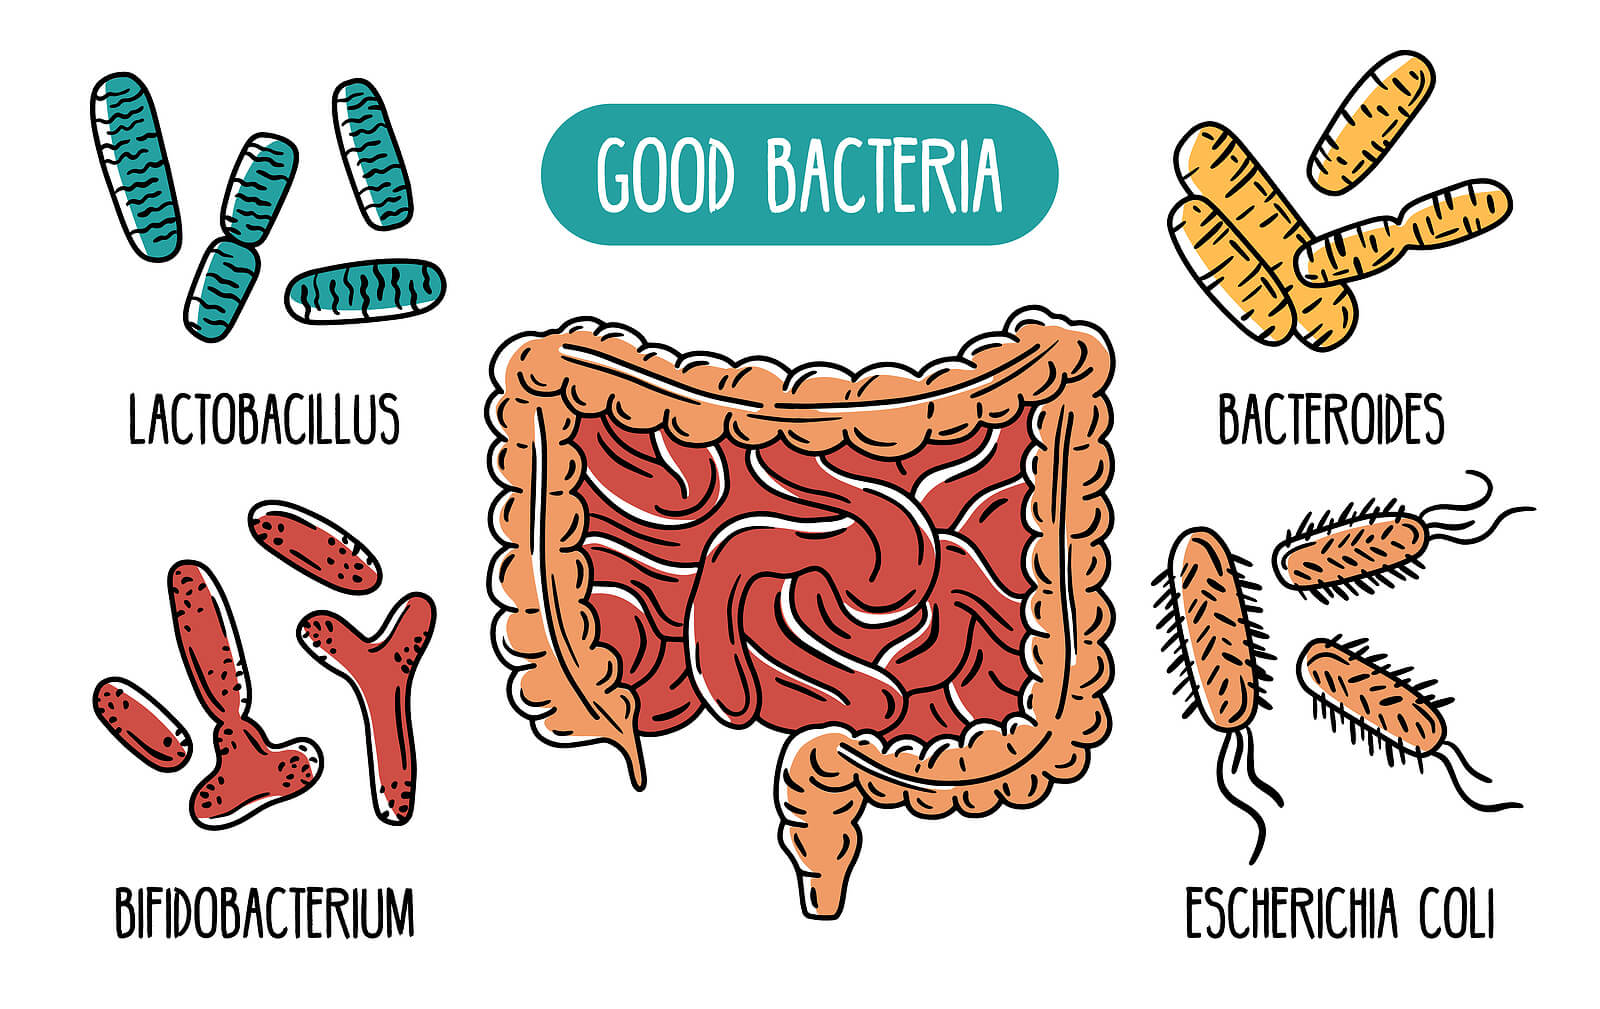 Illustration of good bacteria and human intestines.